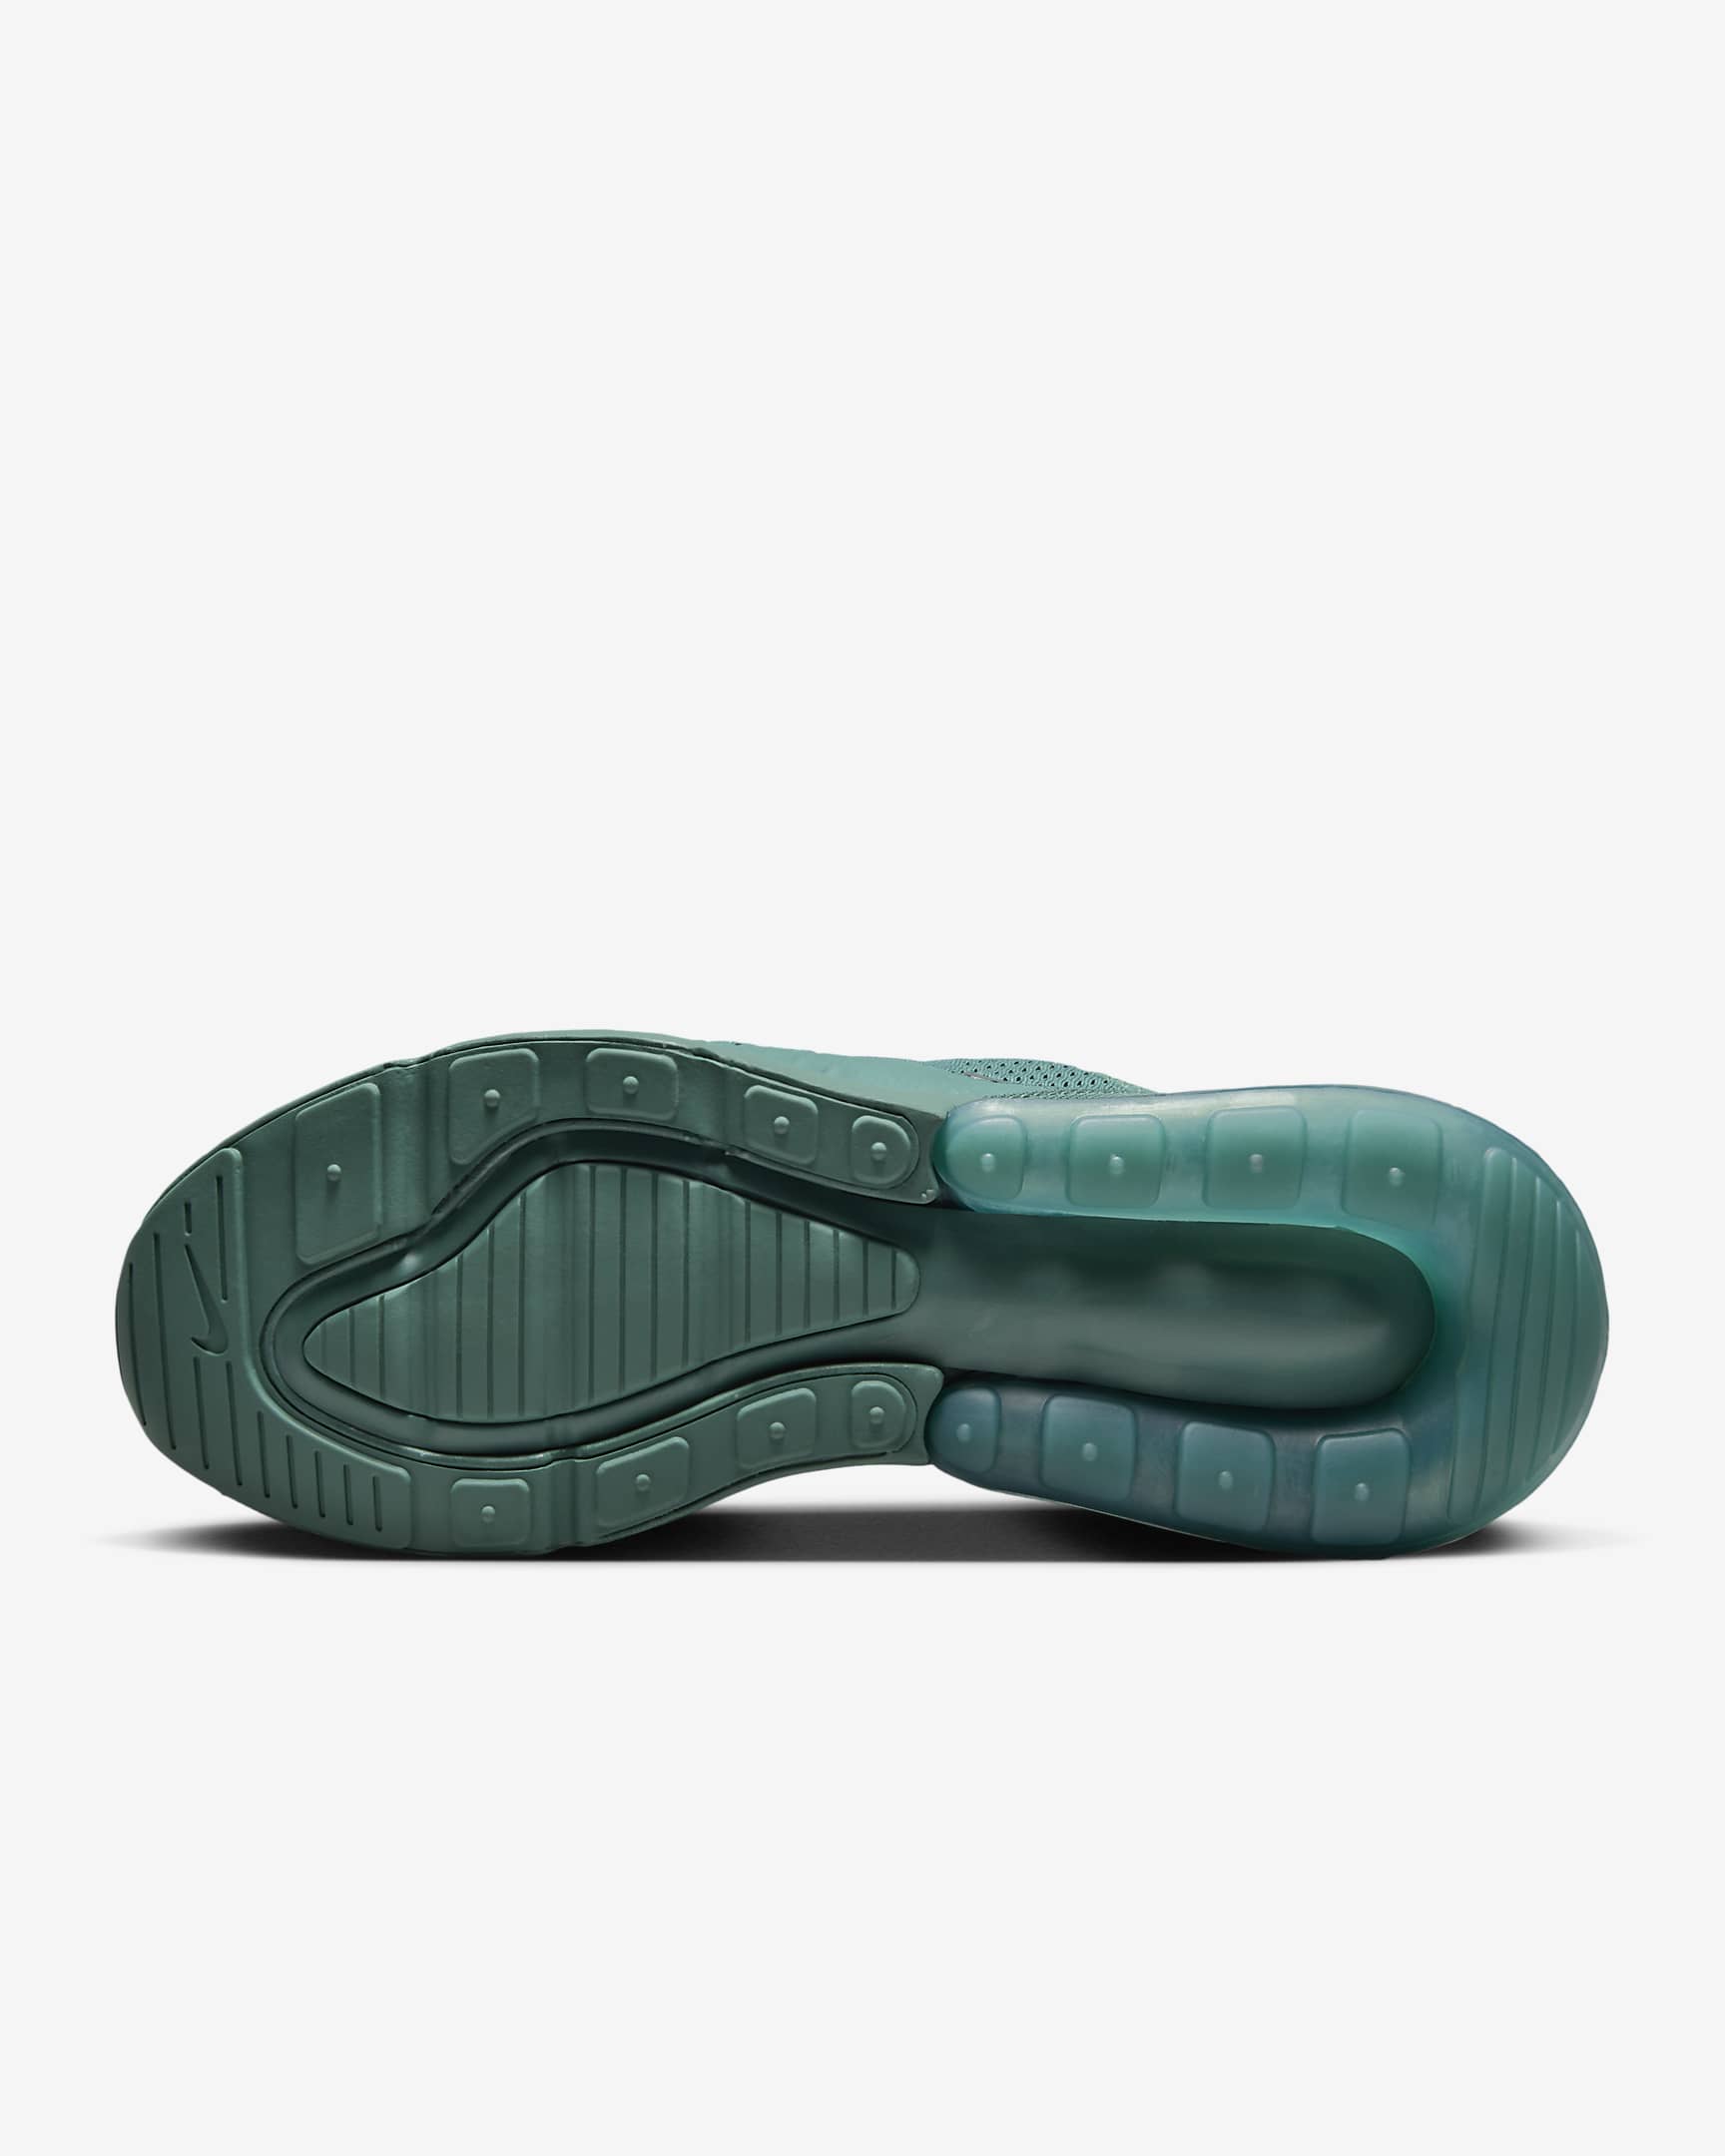 Nike Air Max 270 Women's Shoes - Bicoastal/Metallic Silver/Chrome